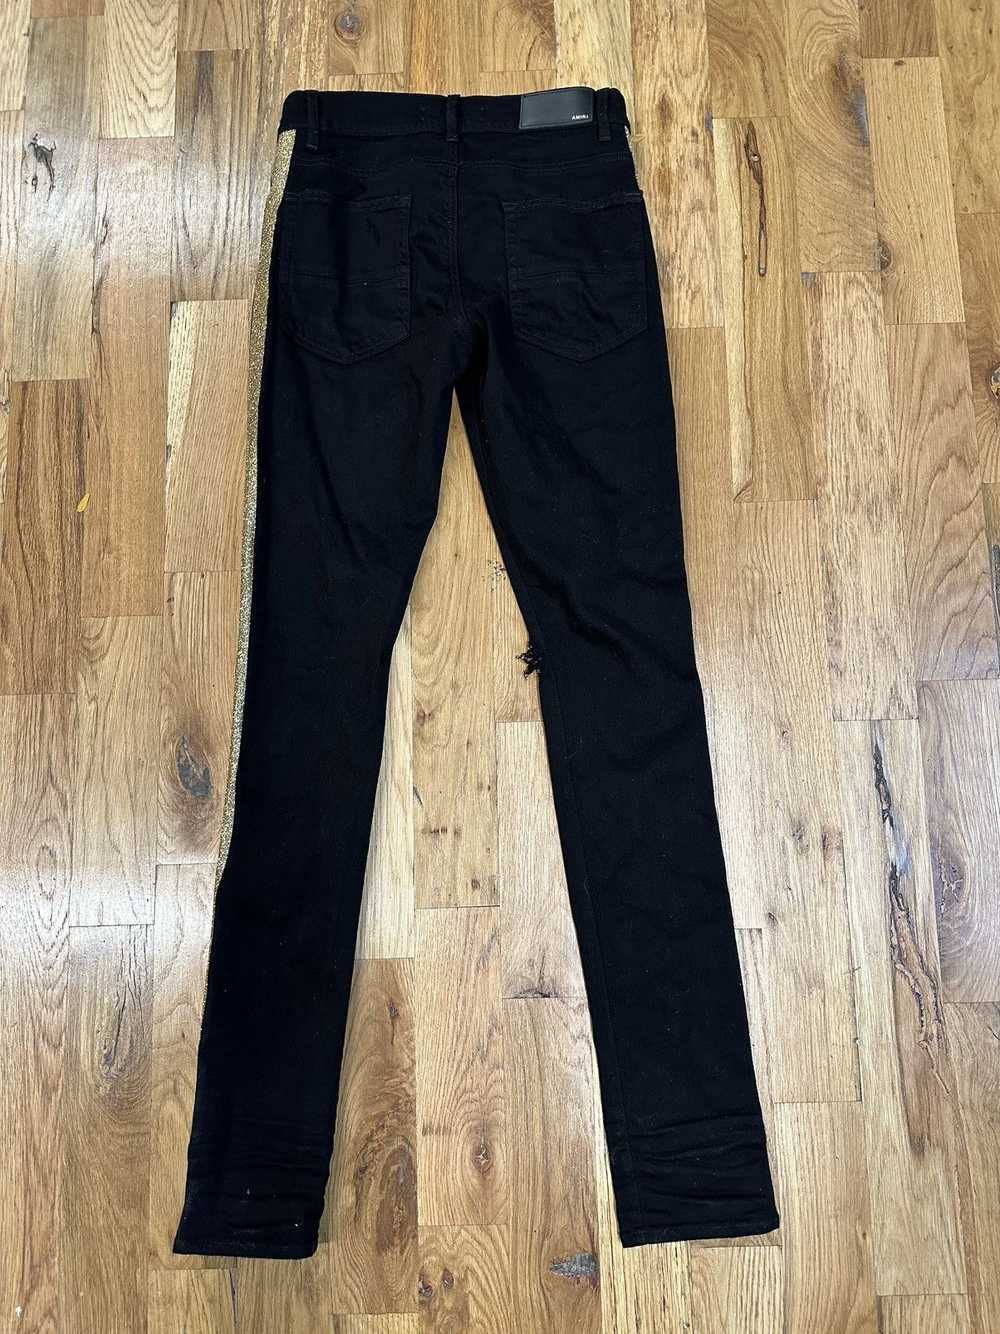 Amiri Amiri Gold Stripe Black Denim Jeans Size 30 - image 2